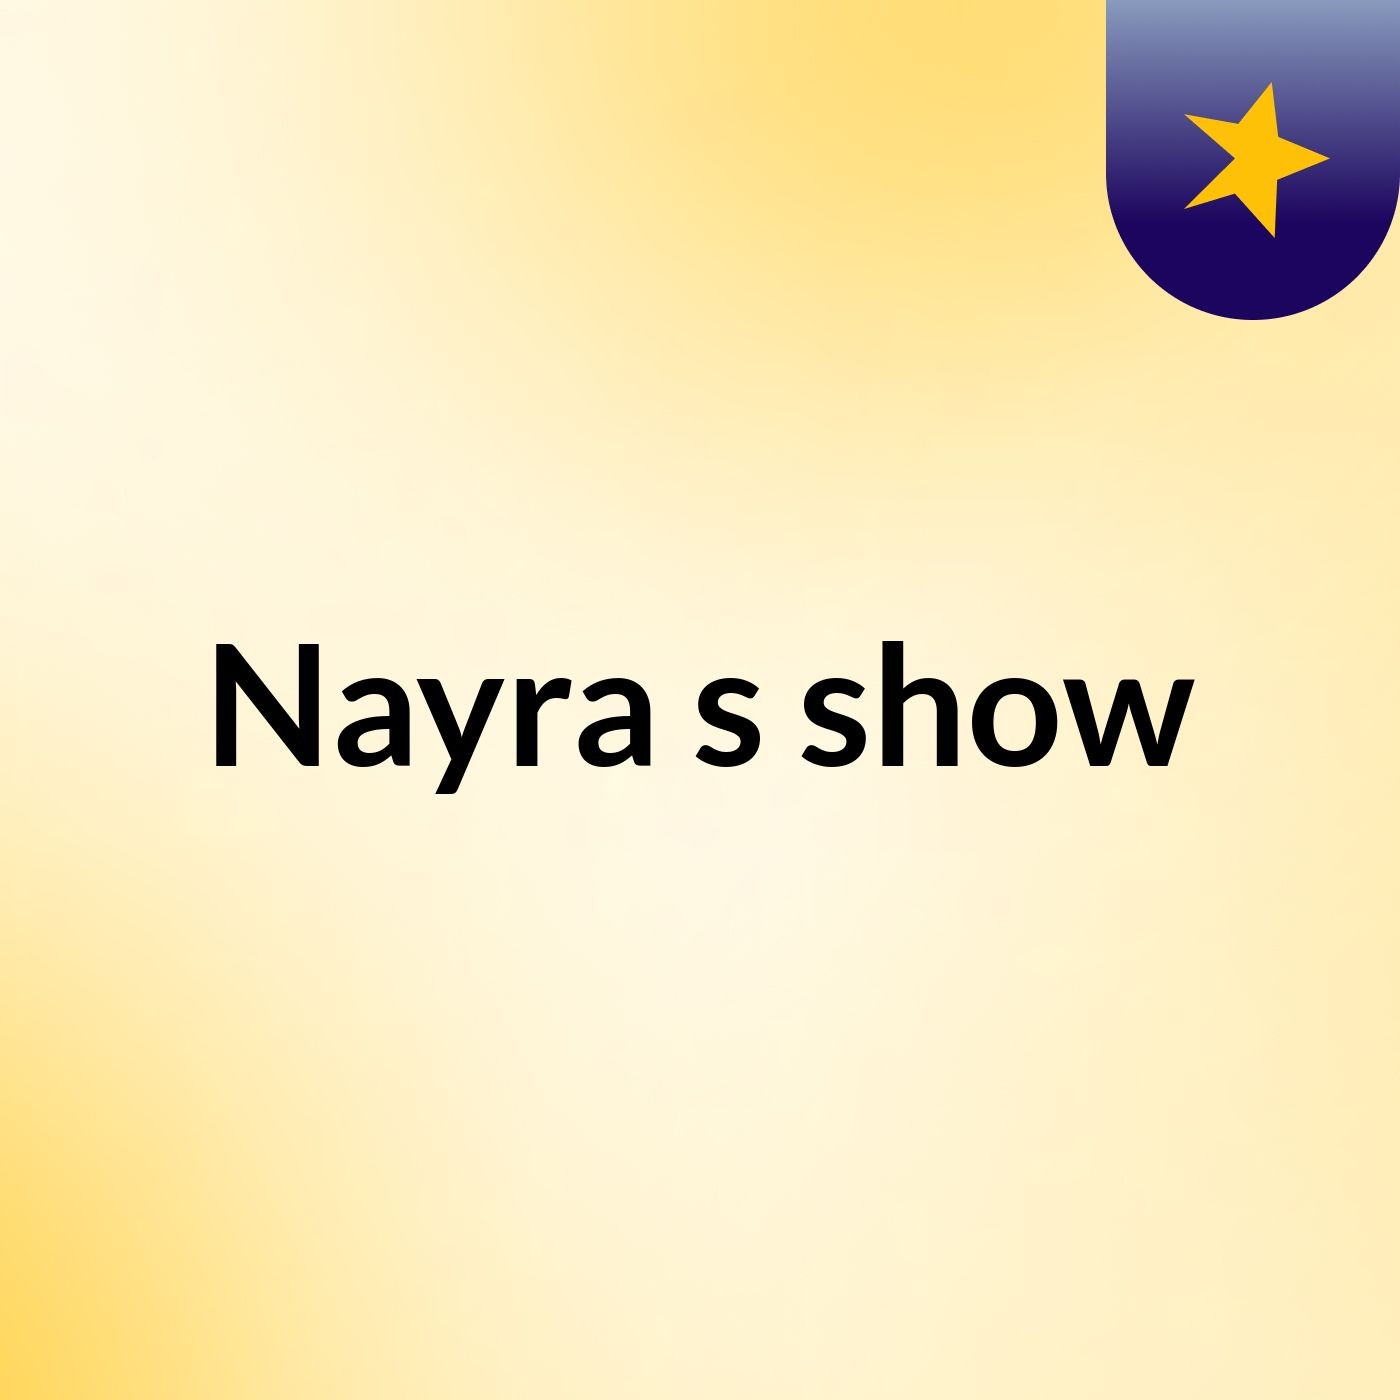 Episódio 4 - Nayra's show